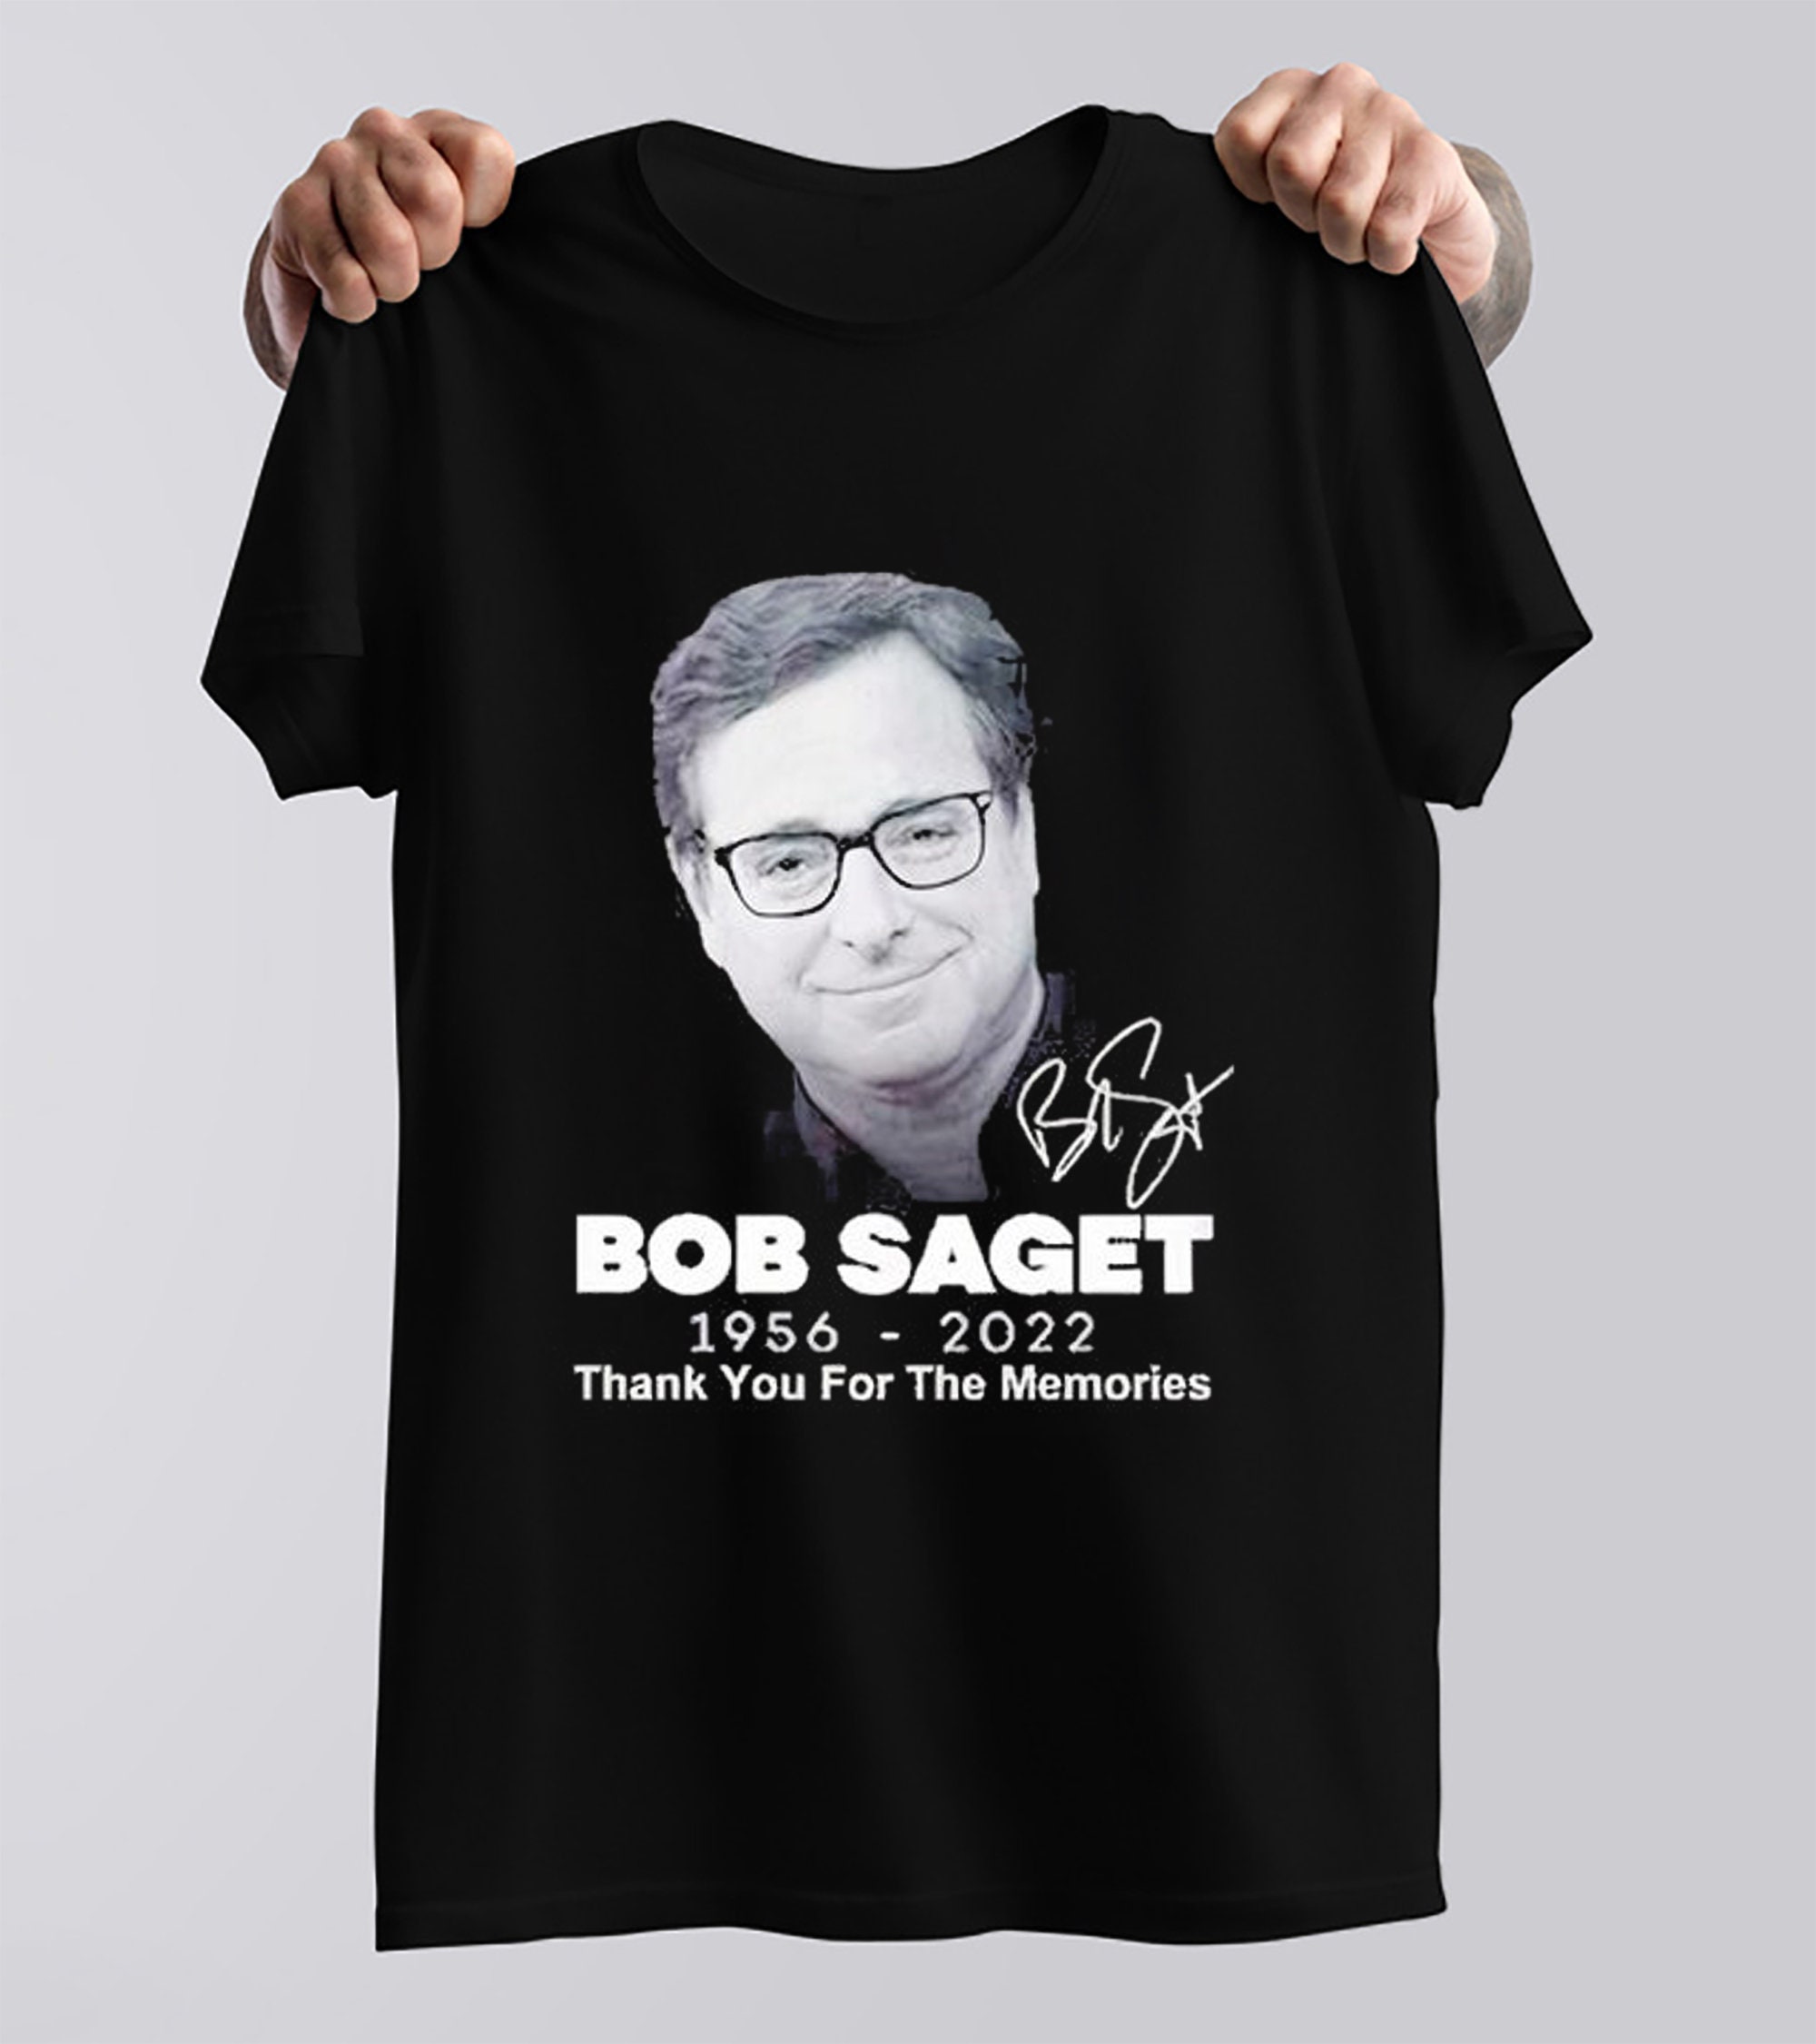 R.I.P Bob Saget T-shirt | Rest in Peace